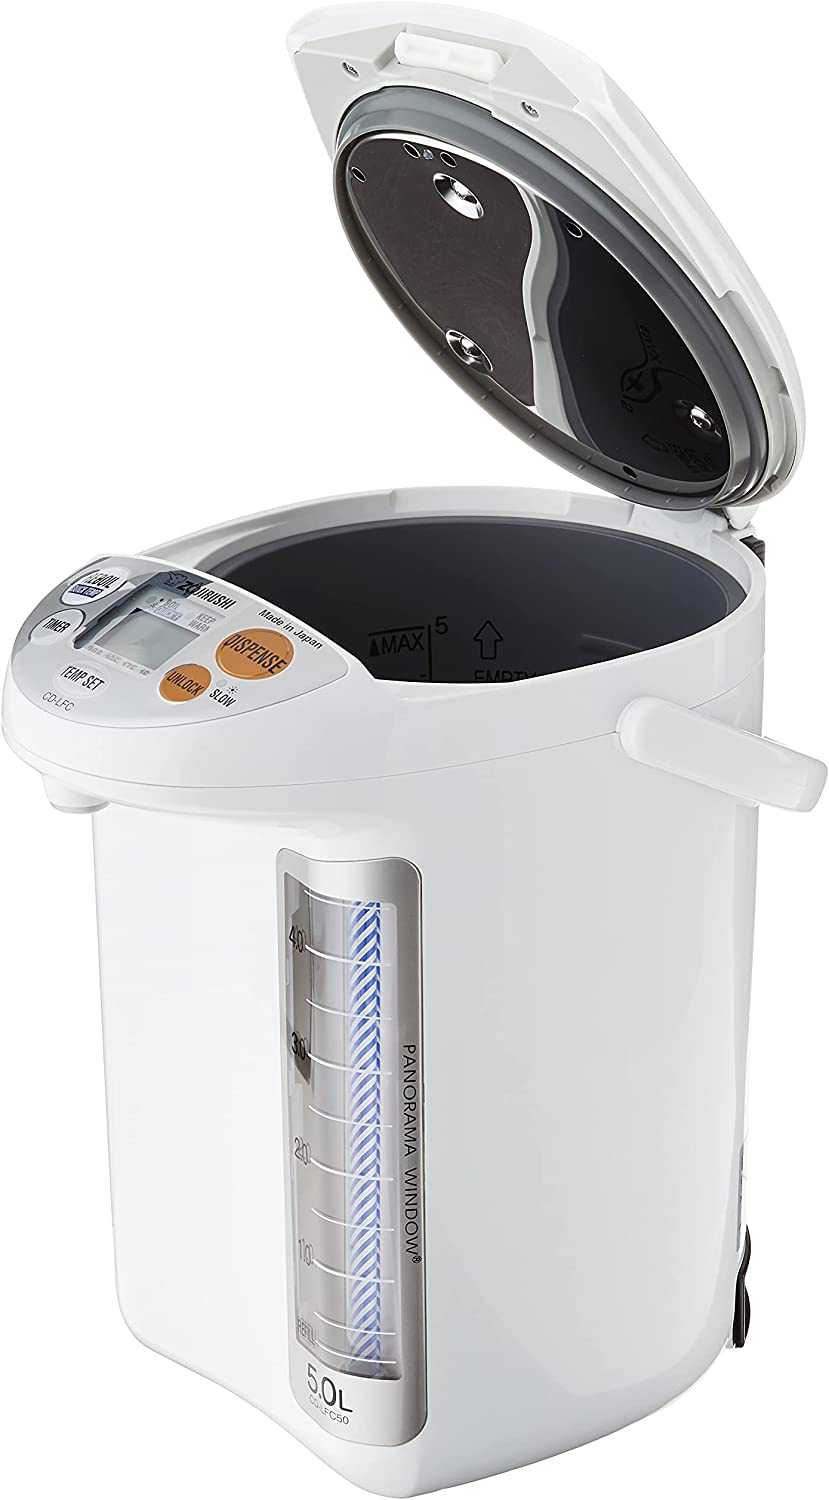 Zojirushi  Micom Water Boiler and Warmer, 5.0 Liters